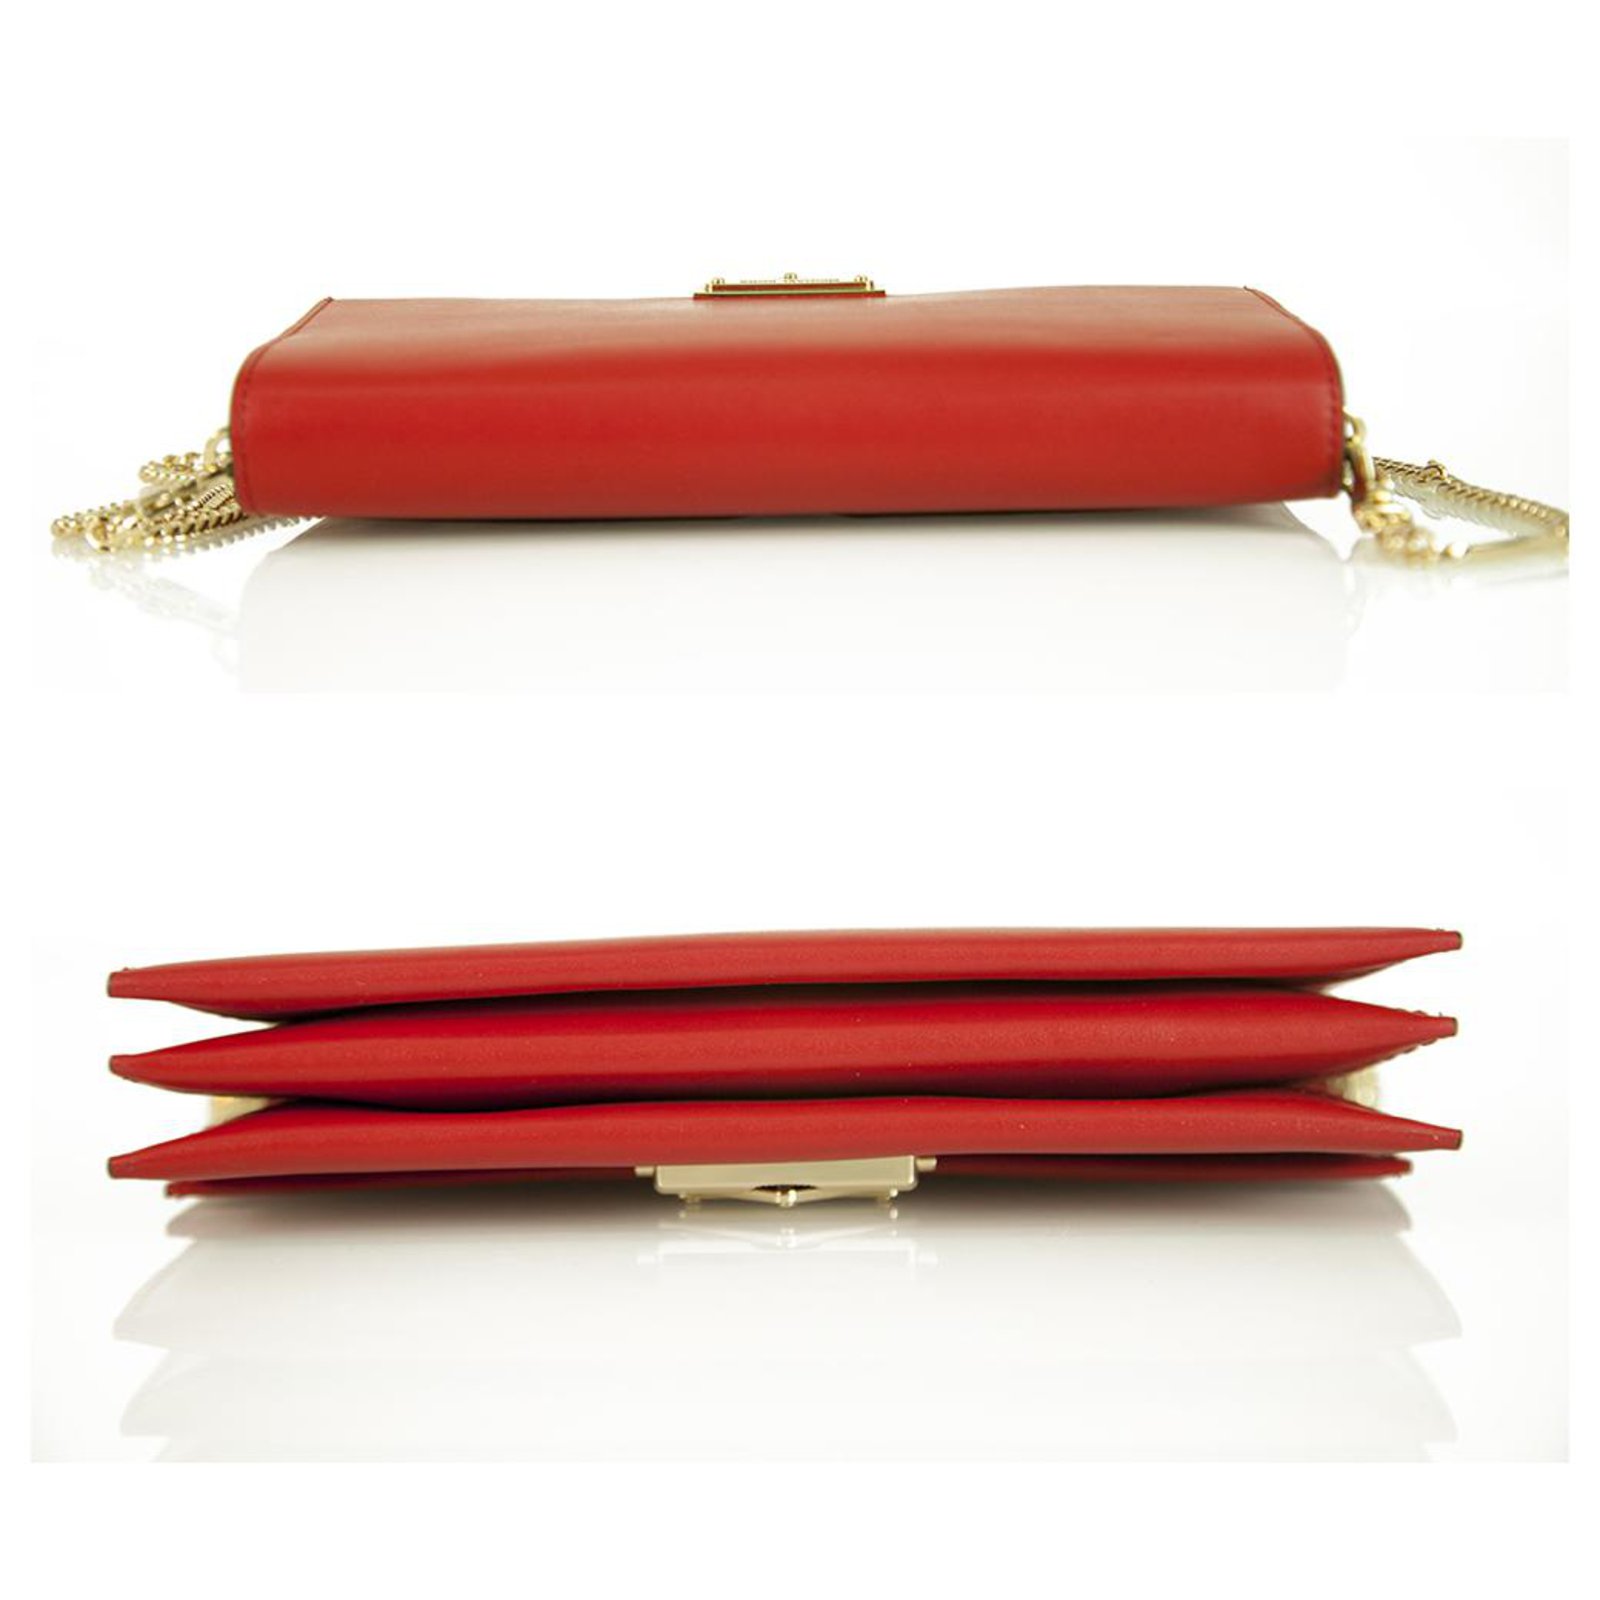 Michael Kors Cece Red Leather Long Gold Chain Clutch Handbag